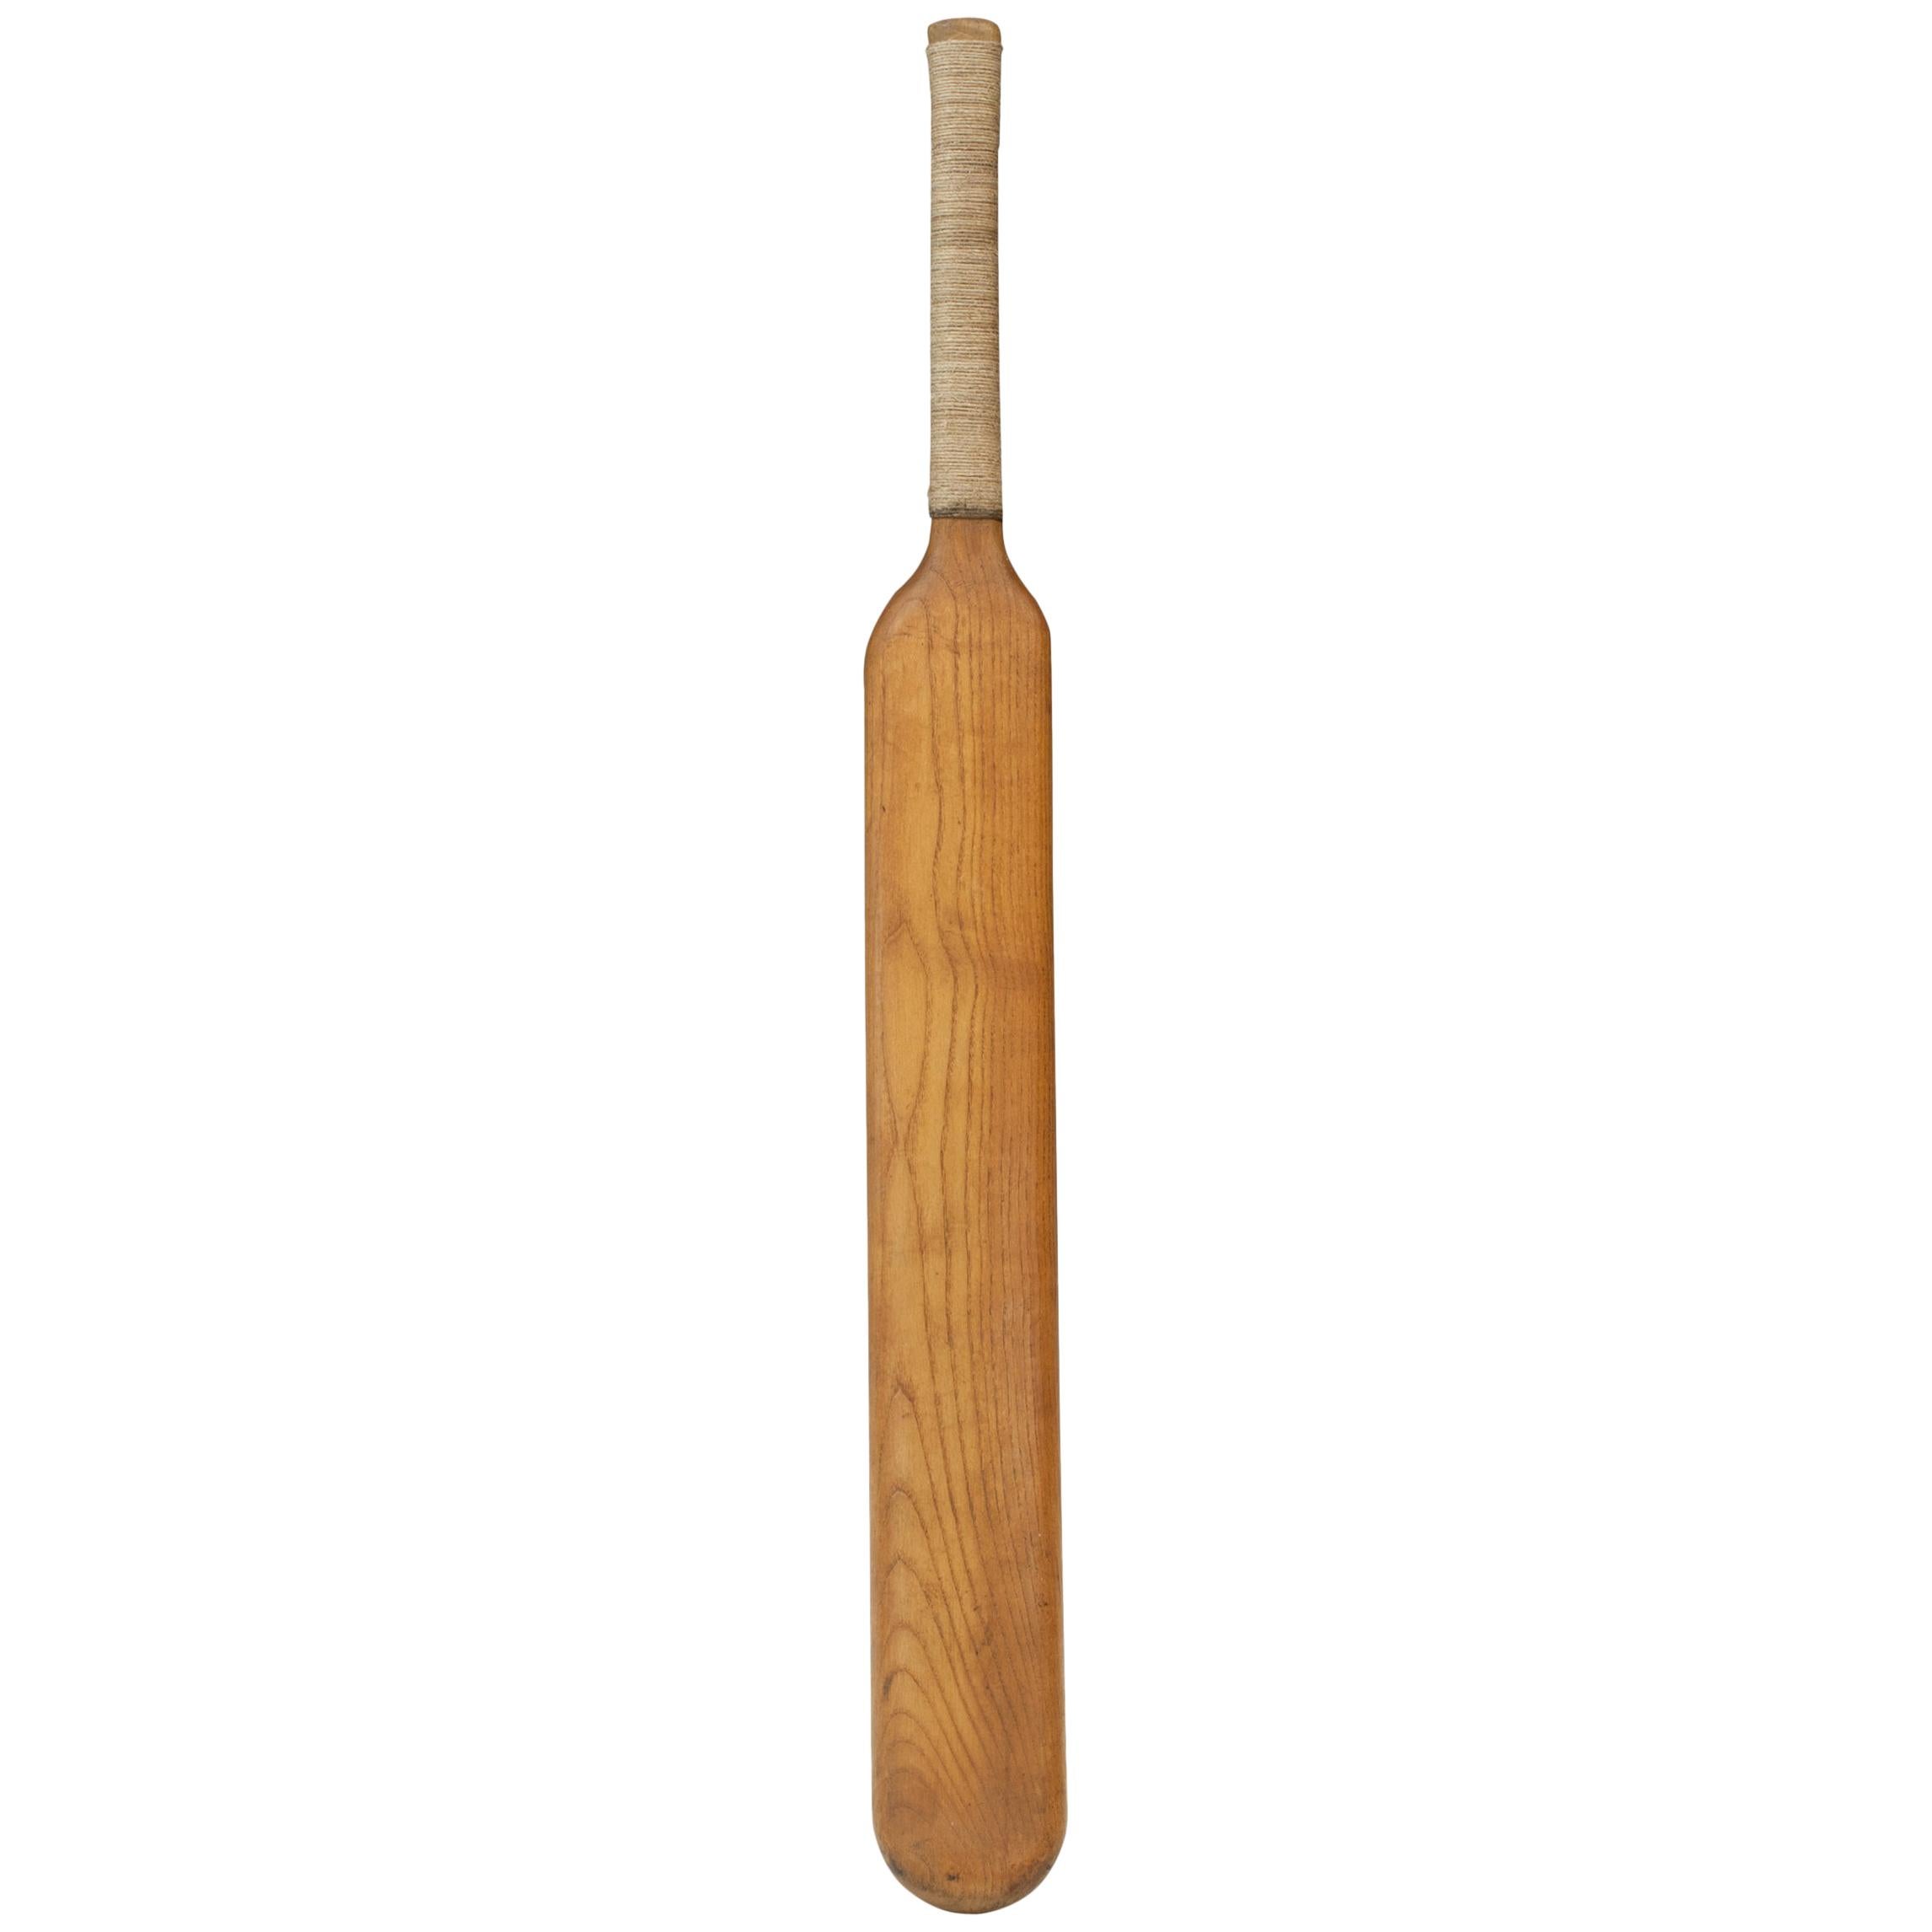 1770s Style Cricket Bat, Unusual Shape